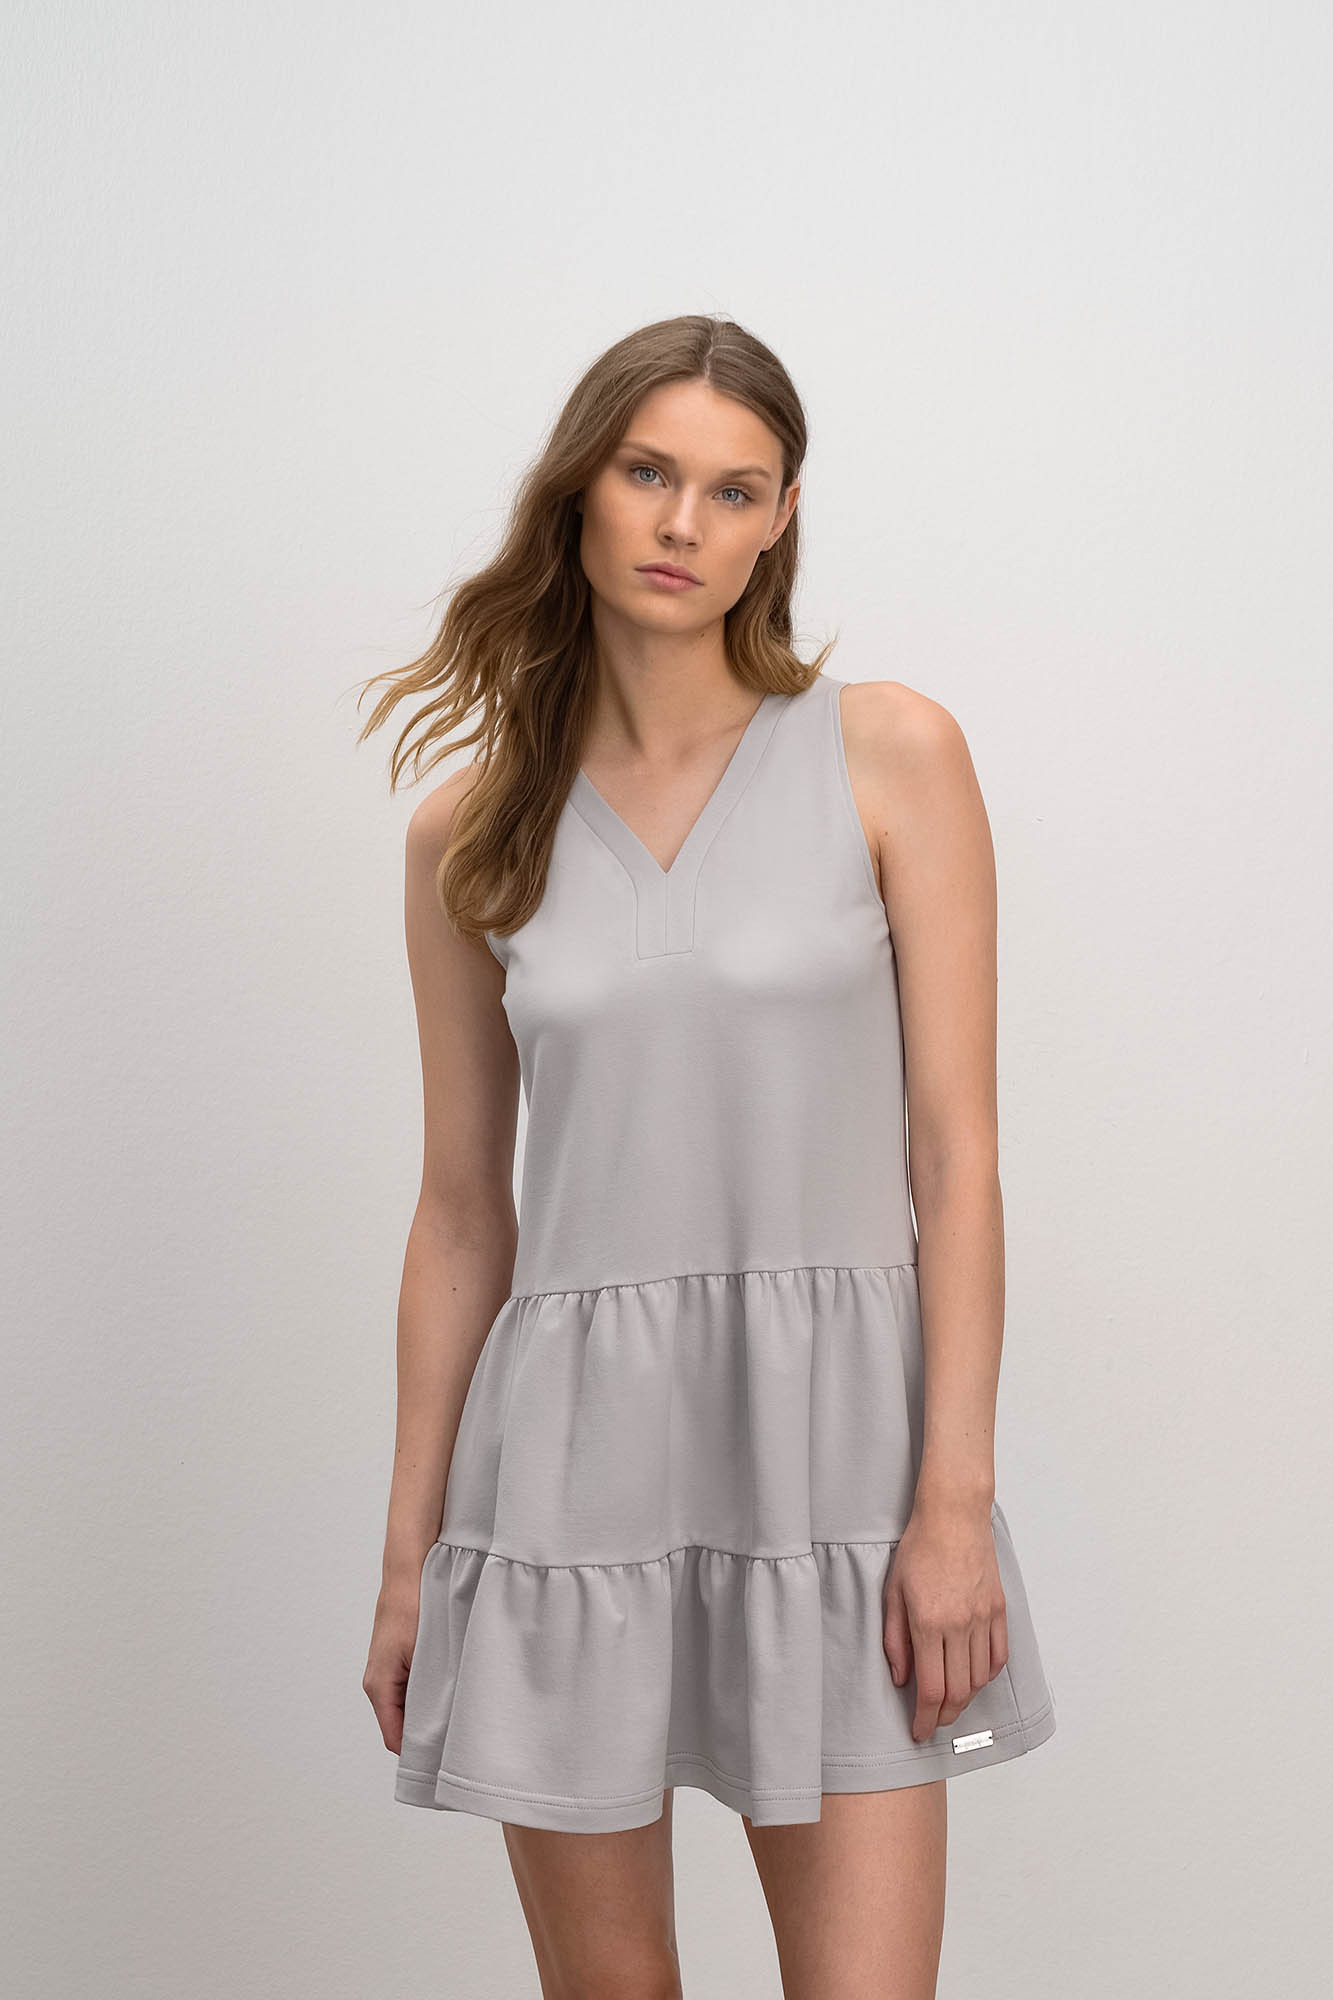 Vamp - Pohodlné jednobarevné dámské šaty 16173 - Vamp gray silver XXL